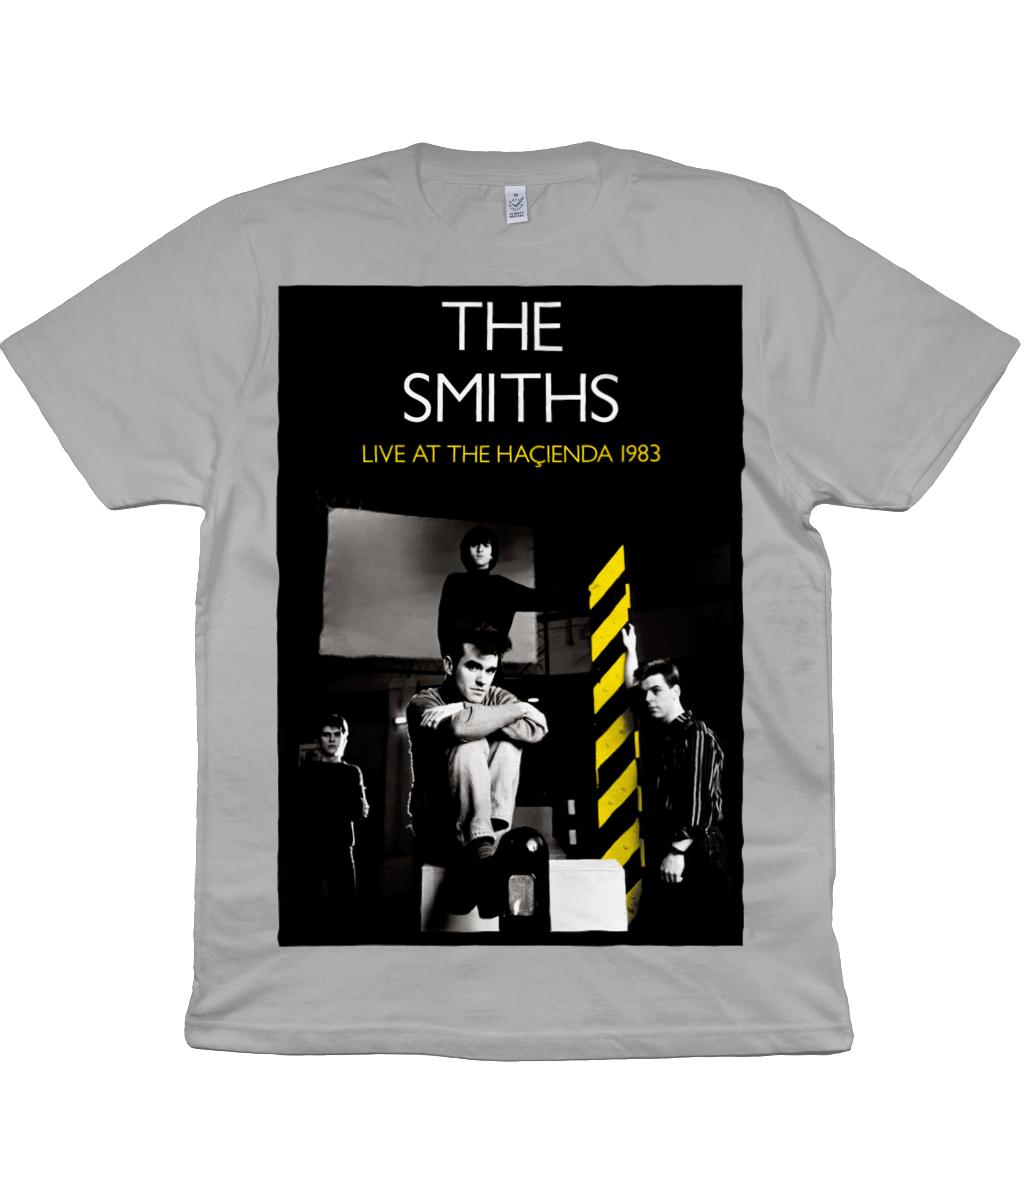 The Smiths - The Hacienda - 1983 - FAC51